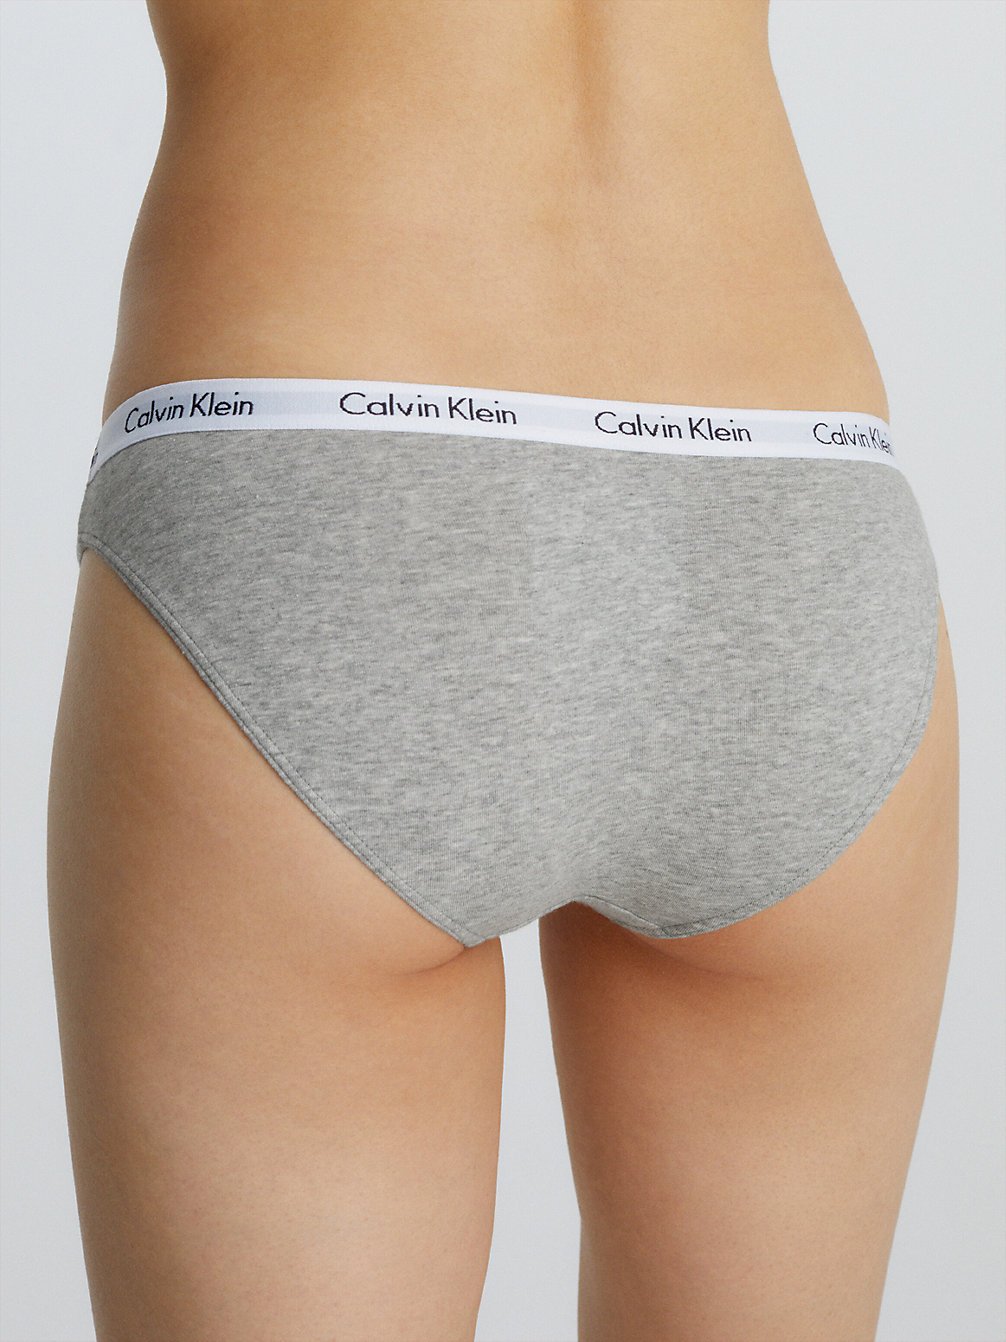 GREY HEATHER Slip – Carousel undefined Damen Calvin Klein